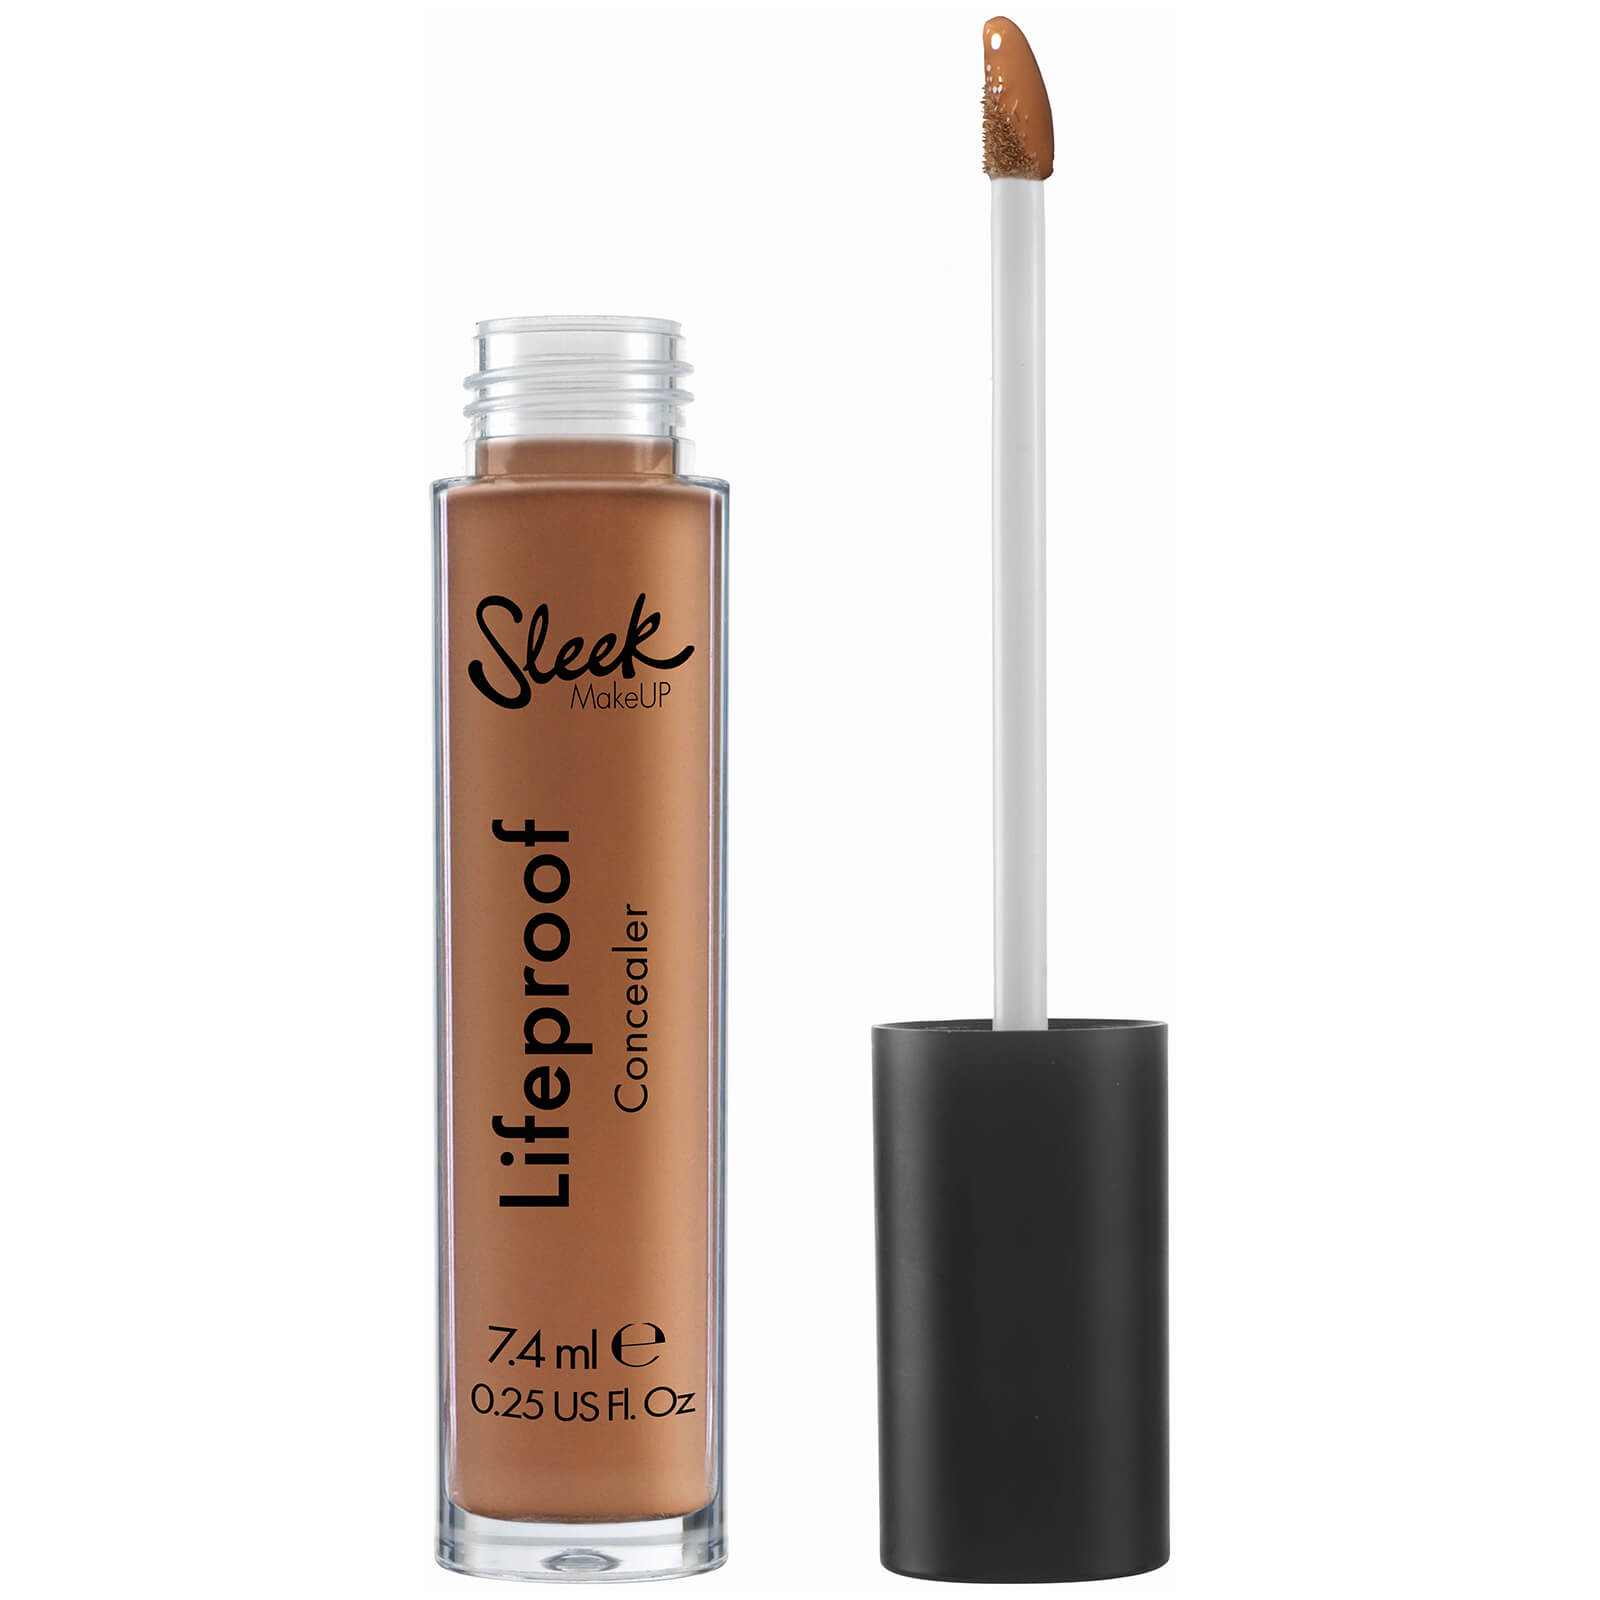 Sleek MakeUP Lifeproof Concealer 7.4ml (Various Shades) - Cafe Macchiato (09)